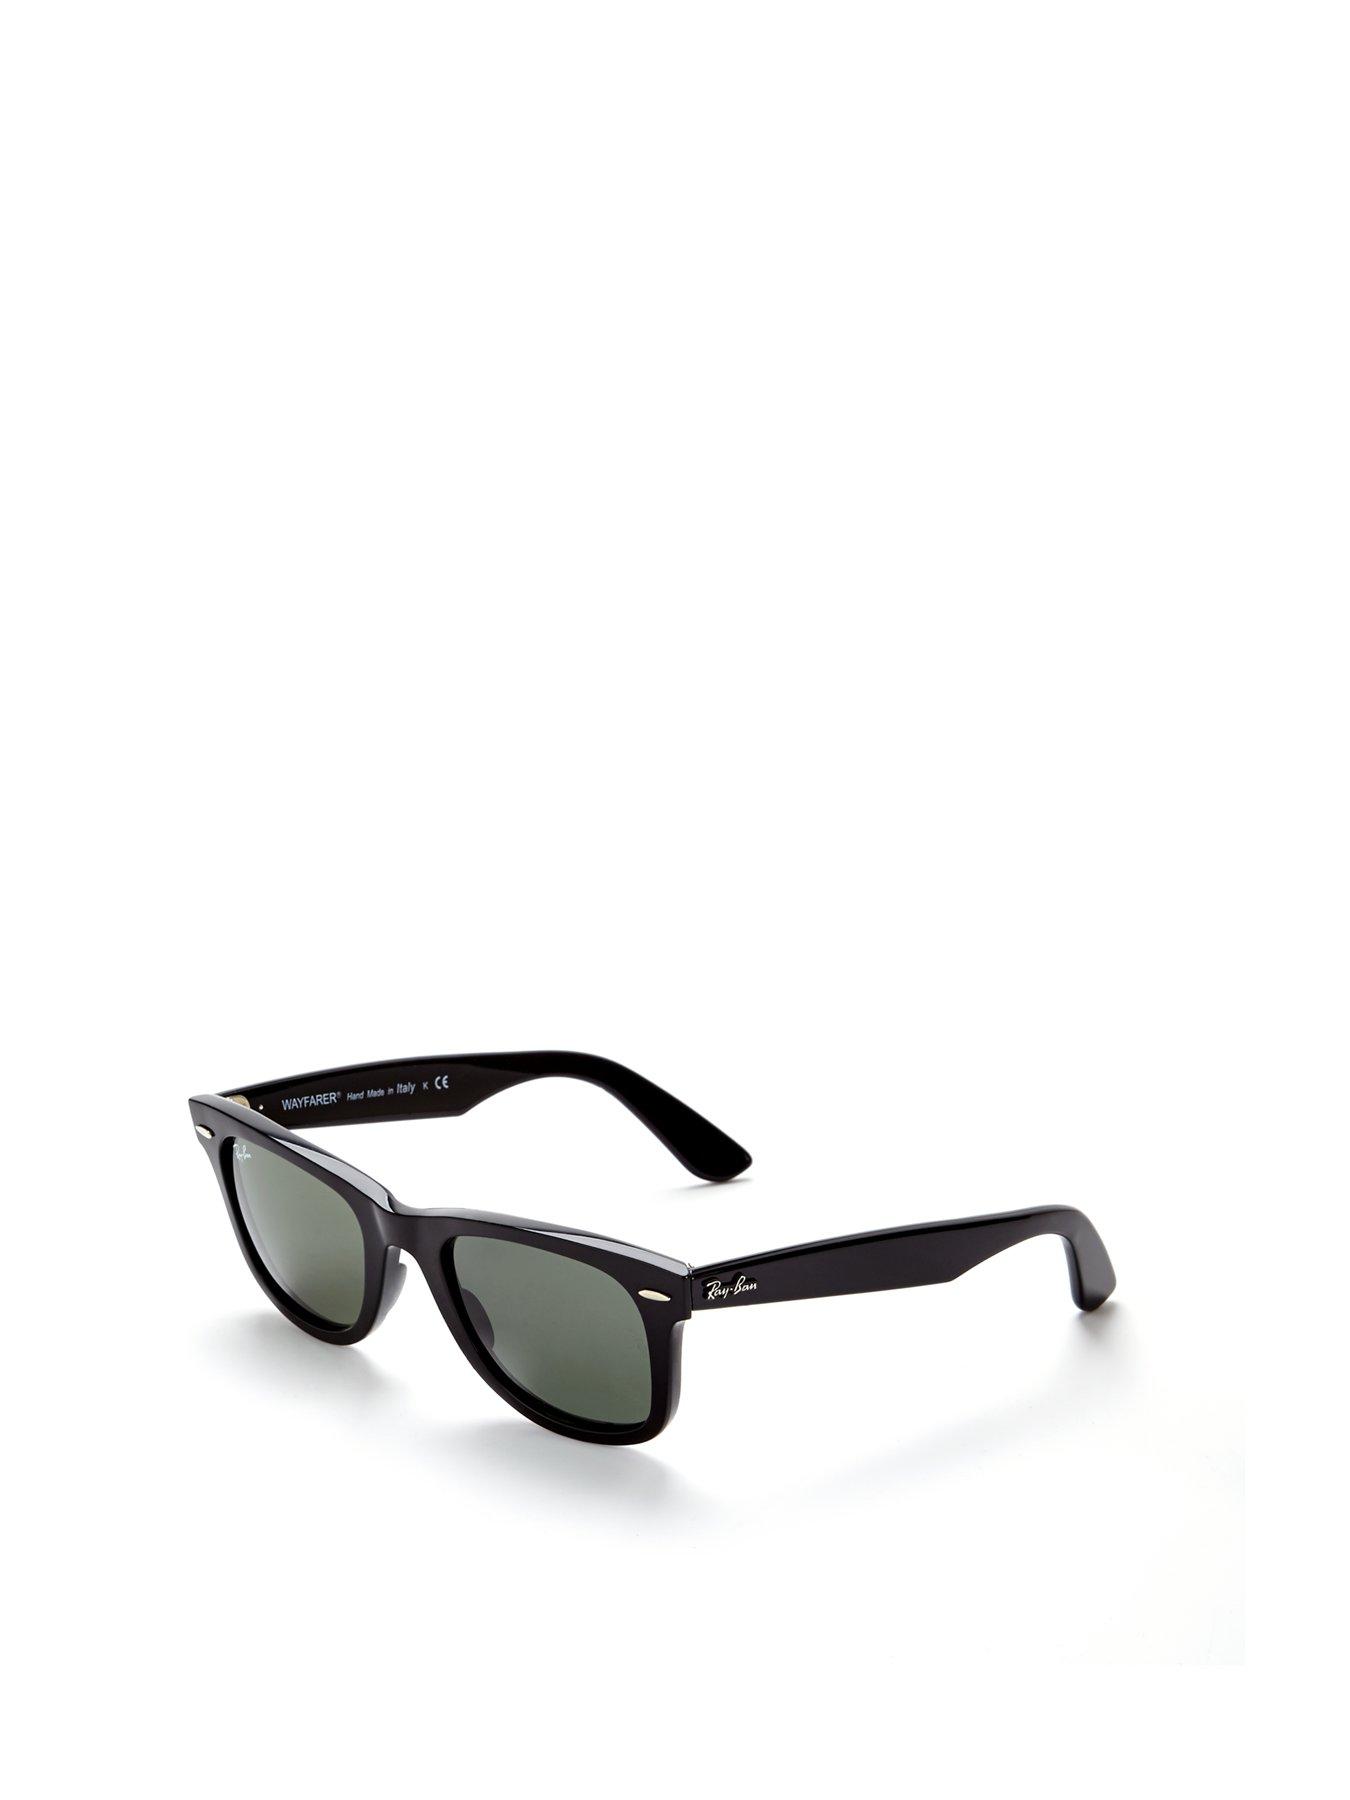 Ray-Ban ORB2140 Wayfarer Sunglasses 